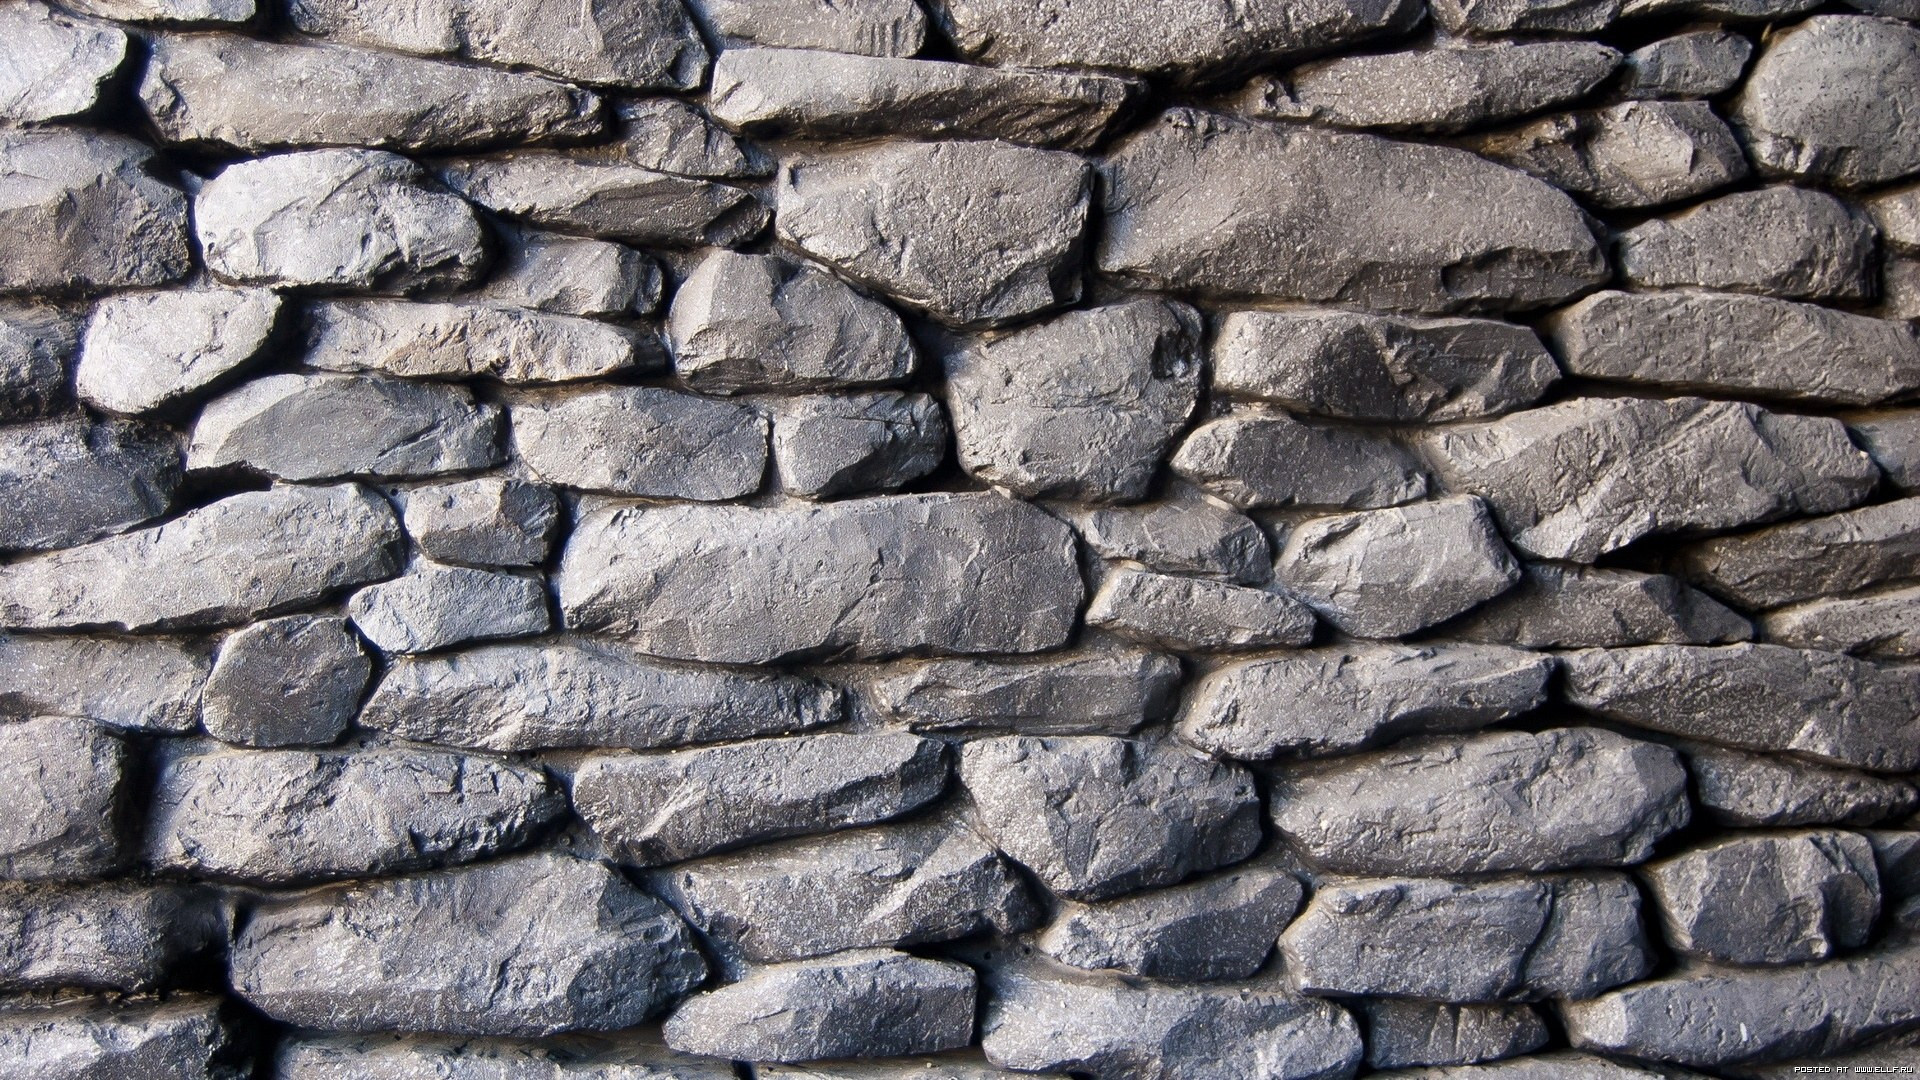 skaly-kamienie (43).jpg